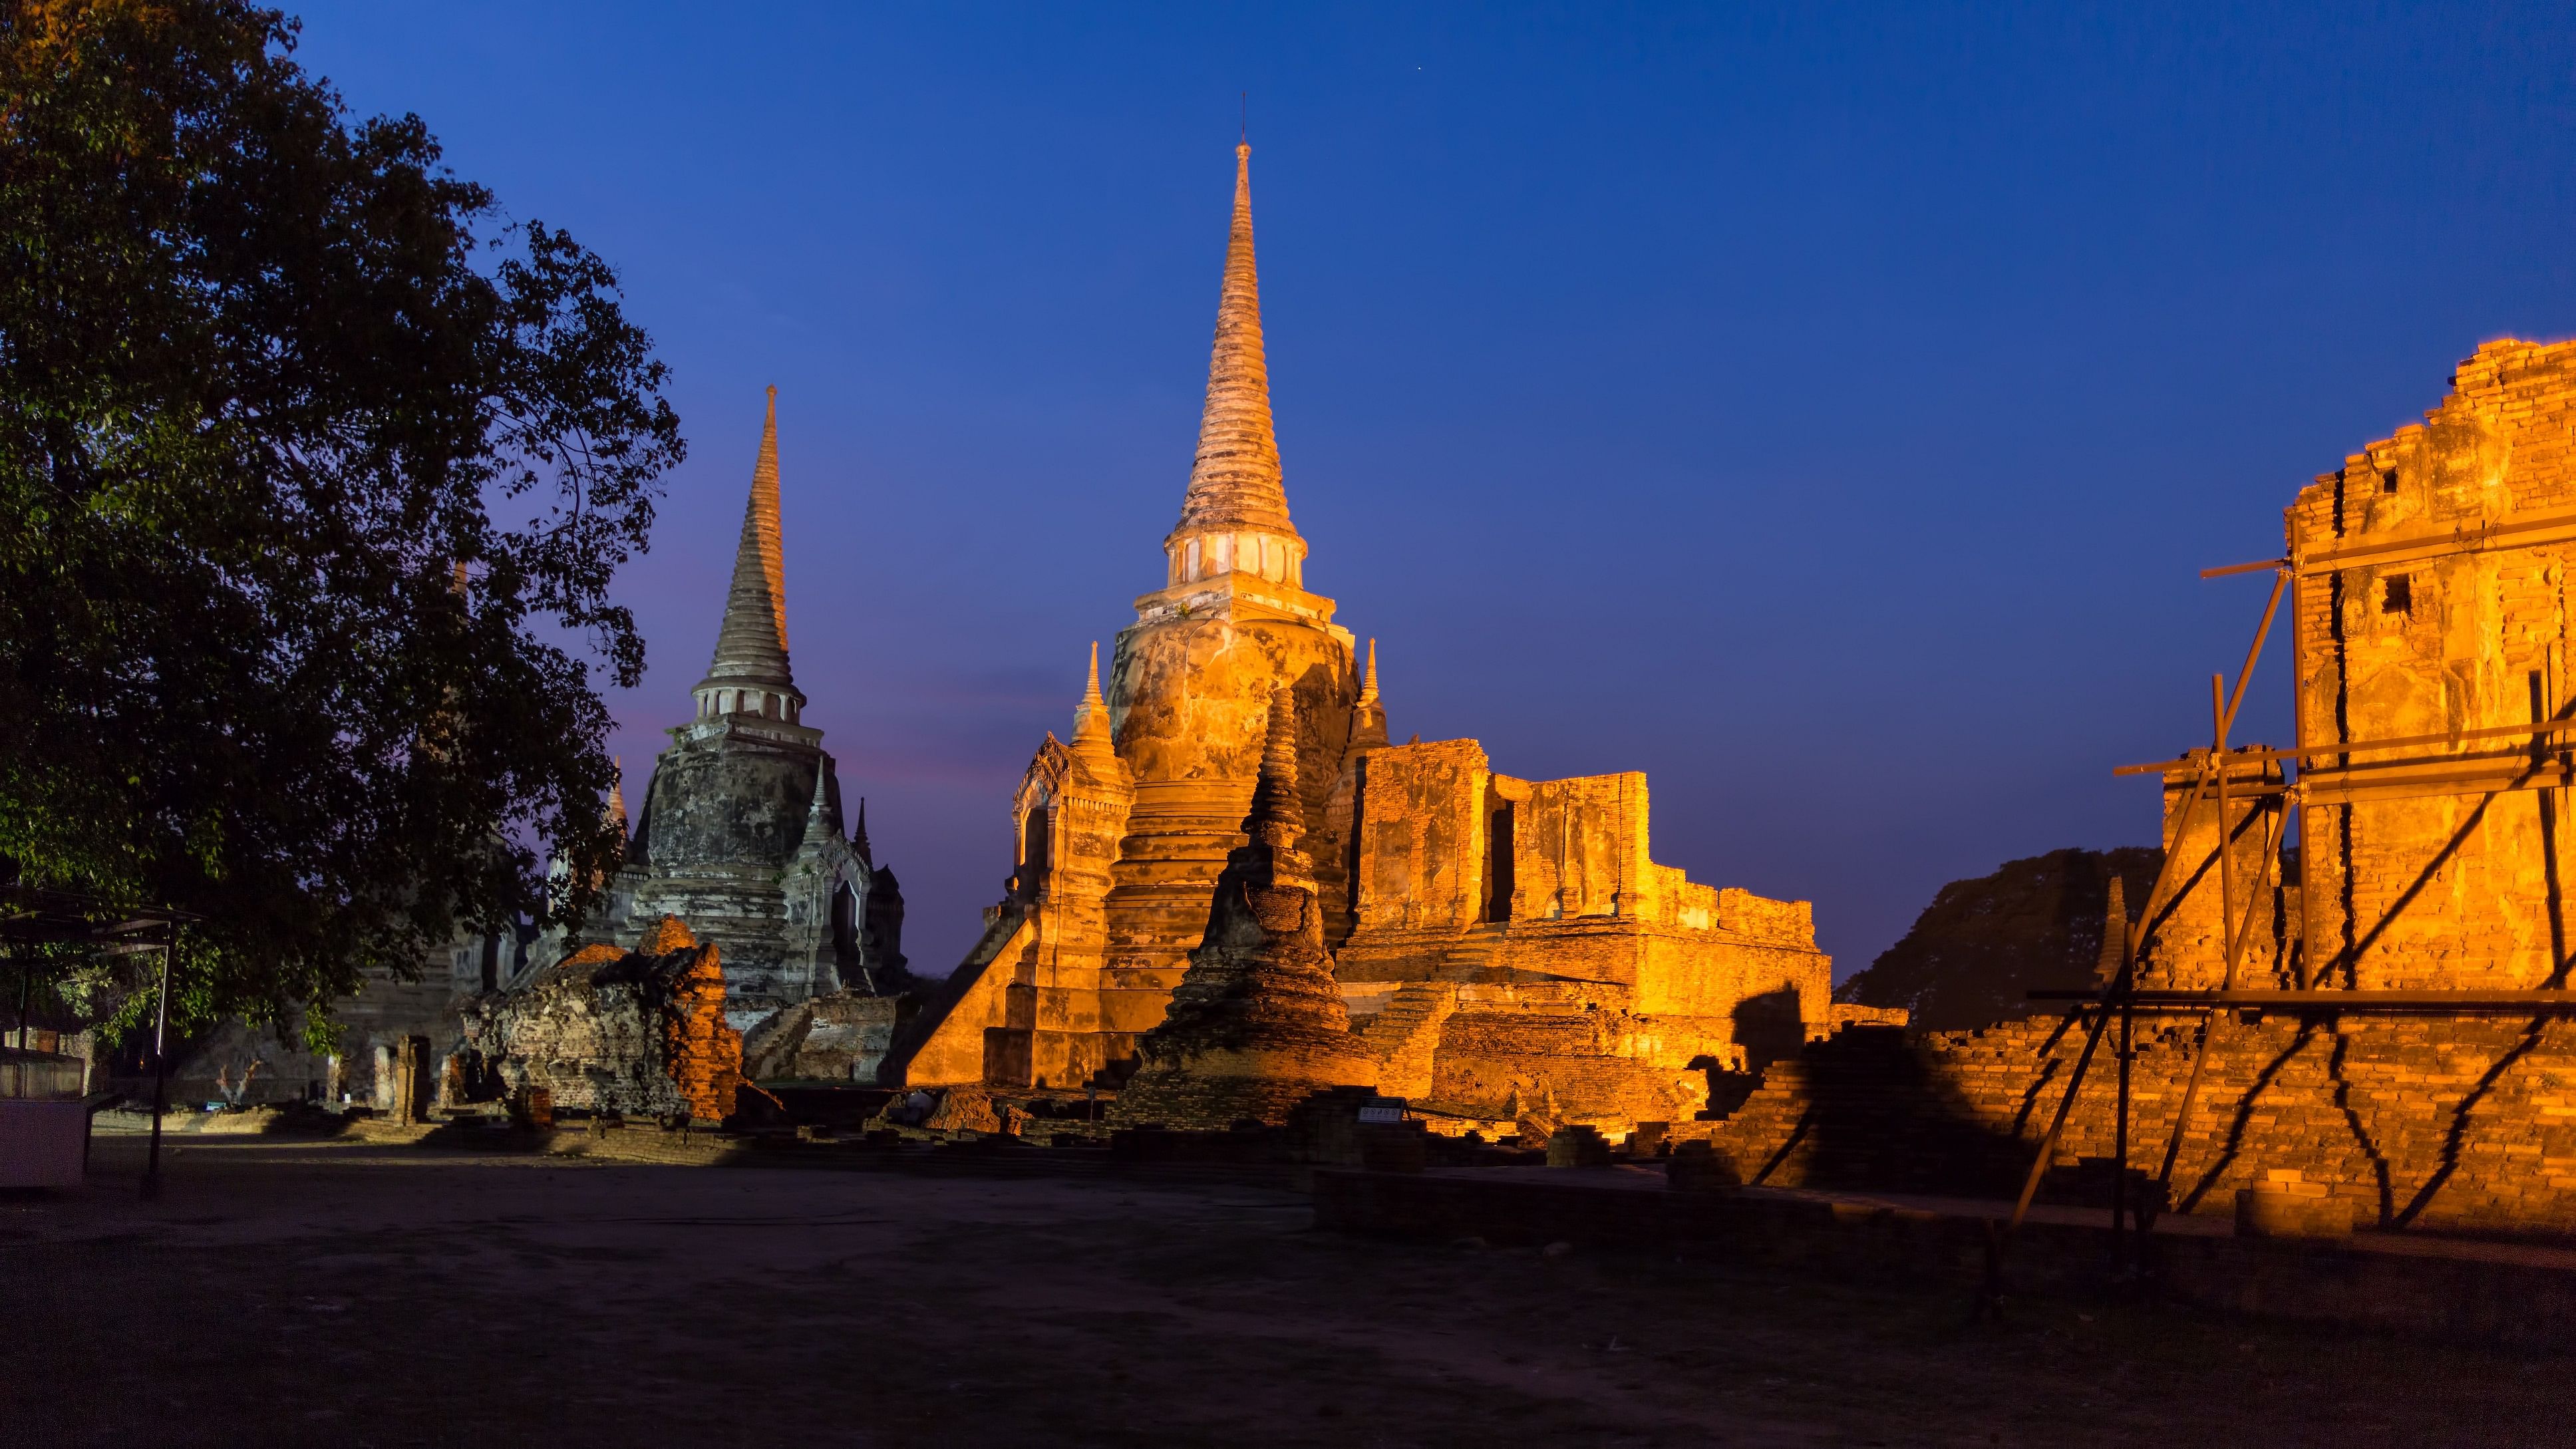 <div class="paragraphs"><p>The famous 3 stupas at Wat Phra Si Sanphet, Ayutthaya, Thailand</p></div>